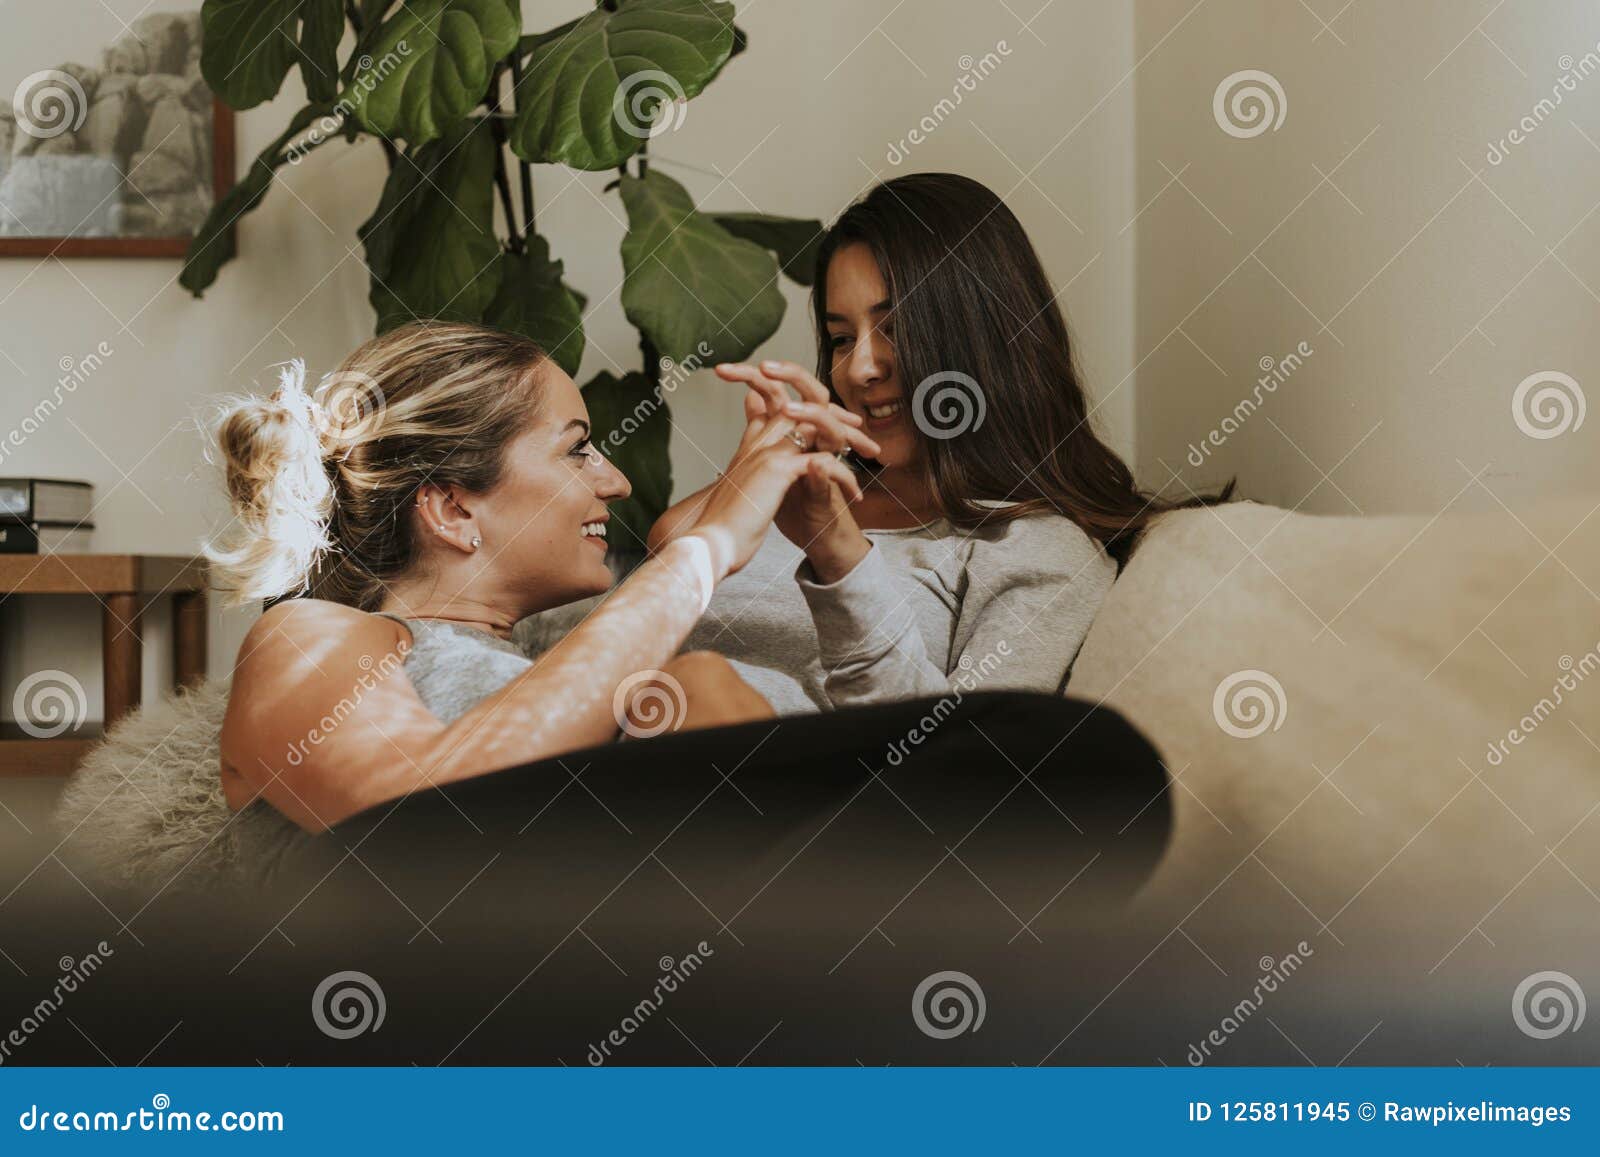 Lesbian Girls Kissing On The Sofa